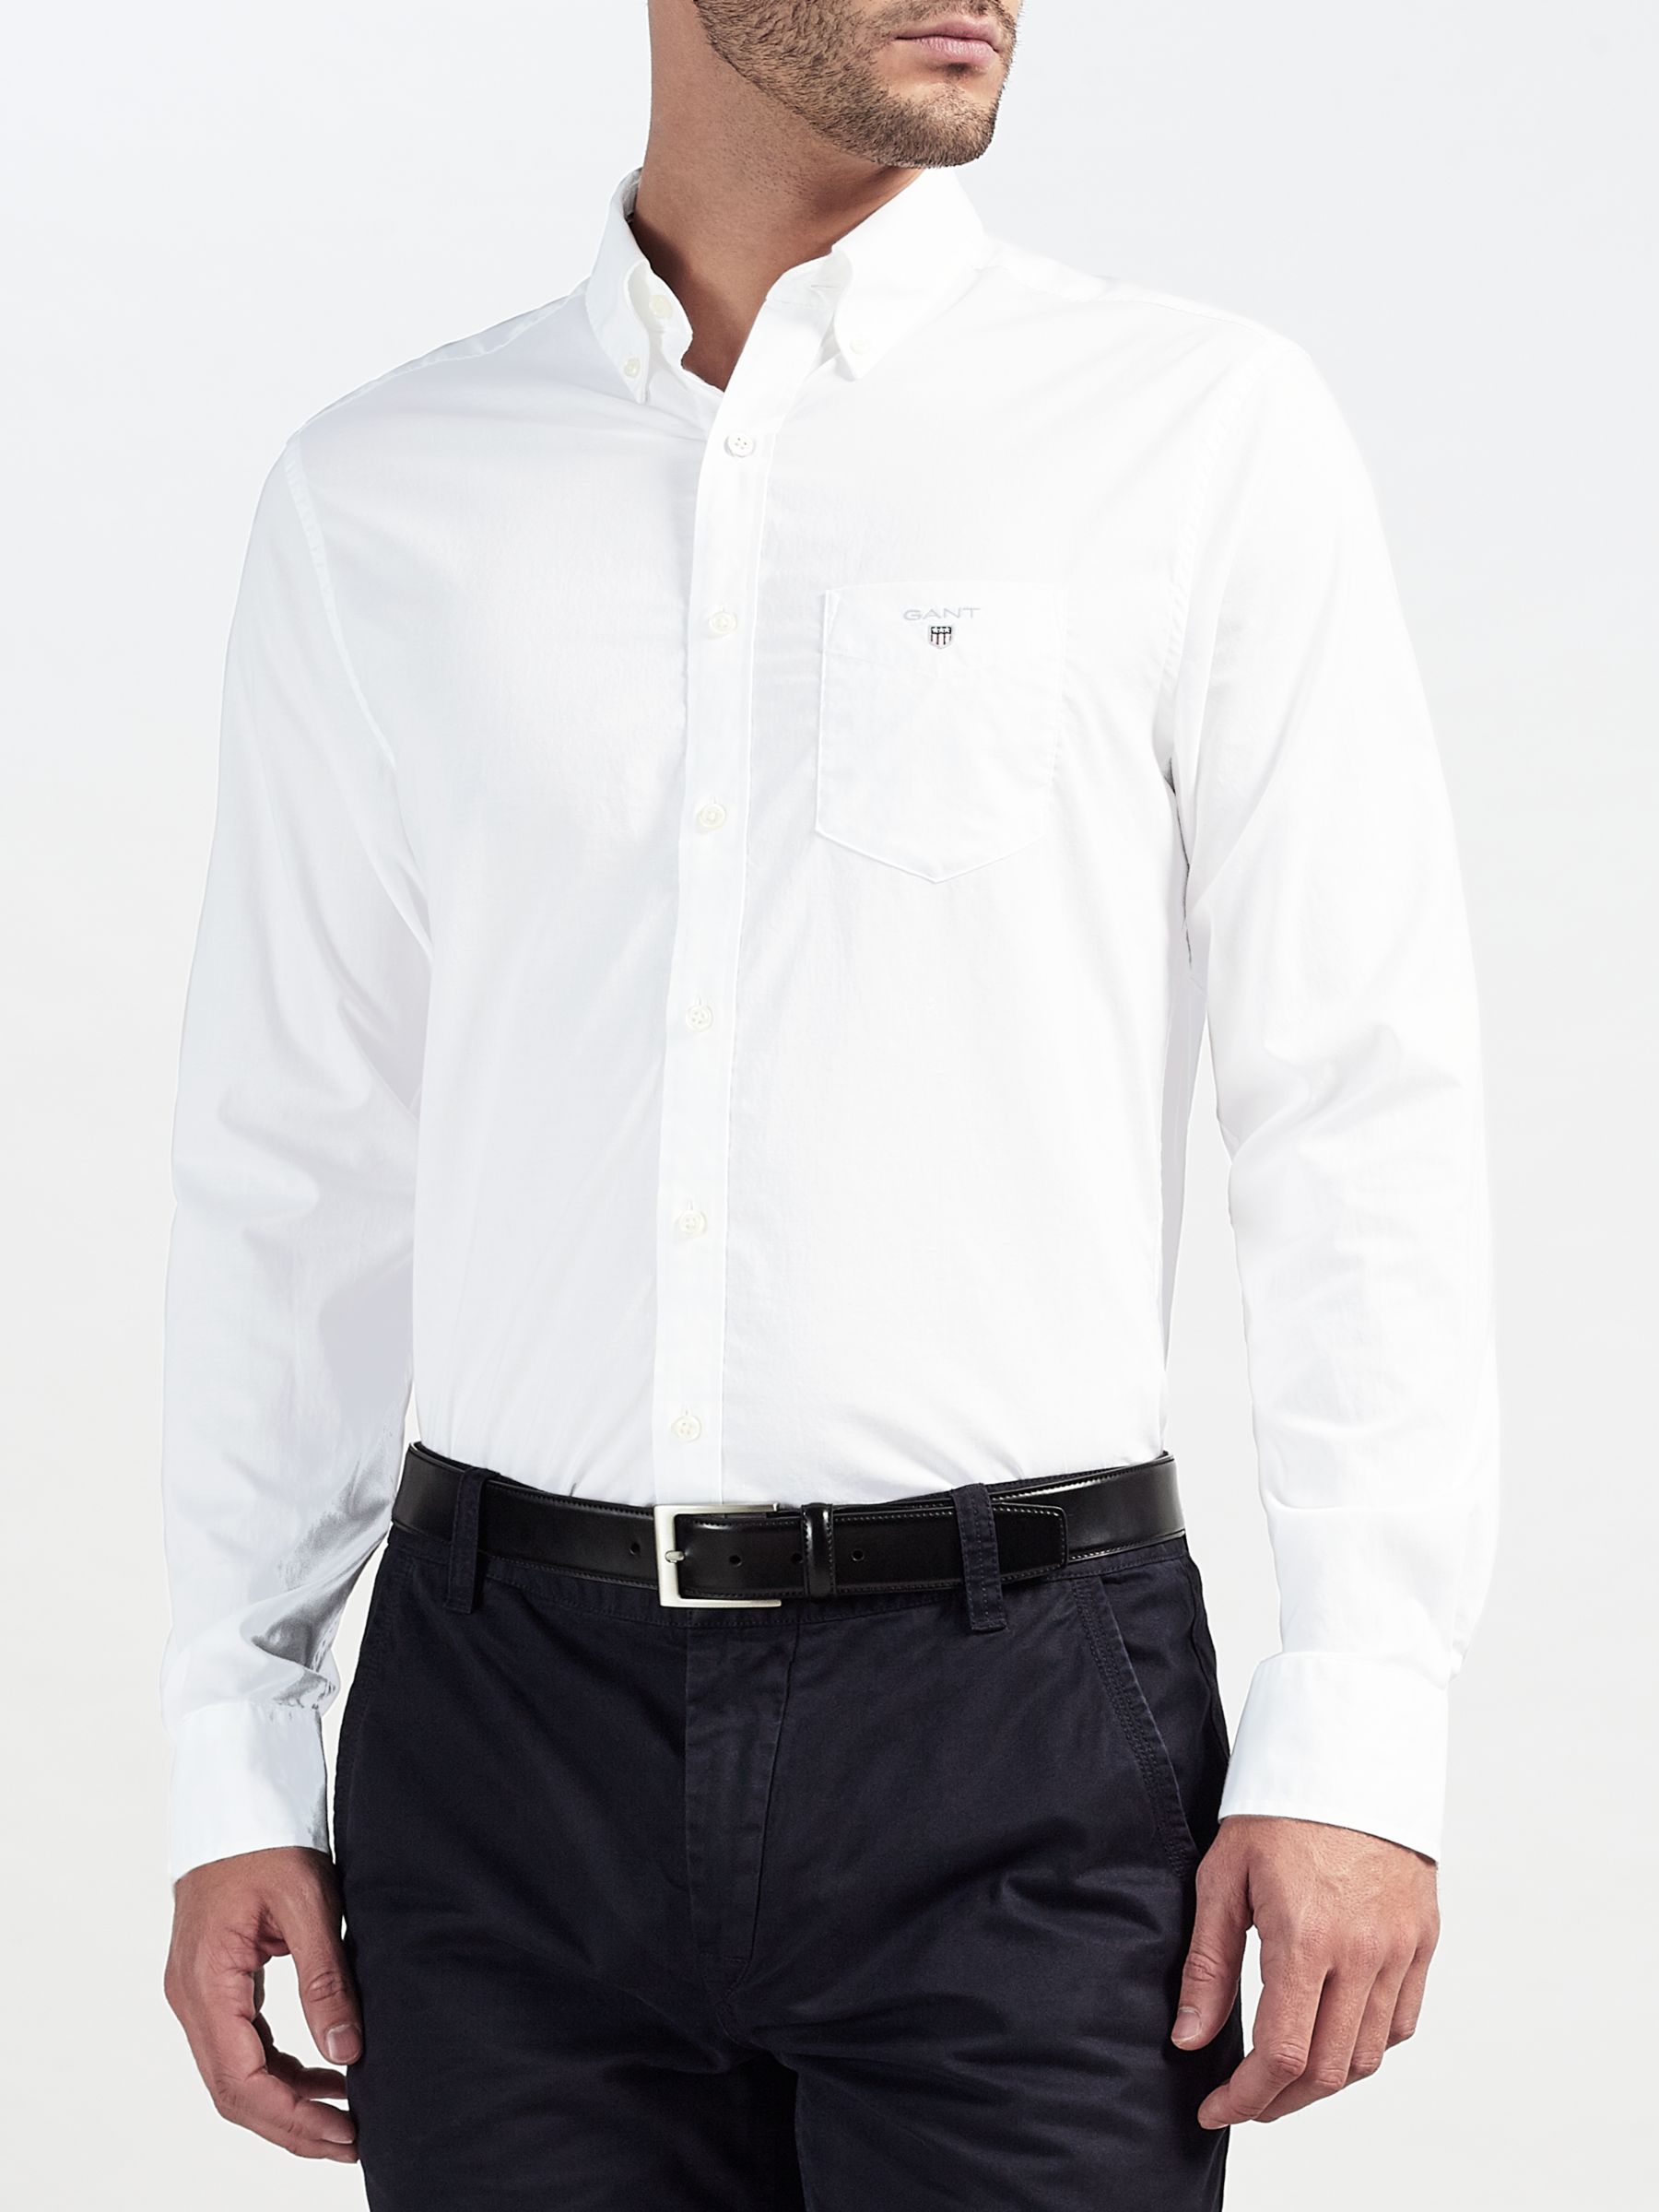 plafond 945 Allergisch GANT Plain Broadcloth Regular Fit Shirt, White at John Lewis & Partners